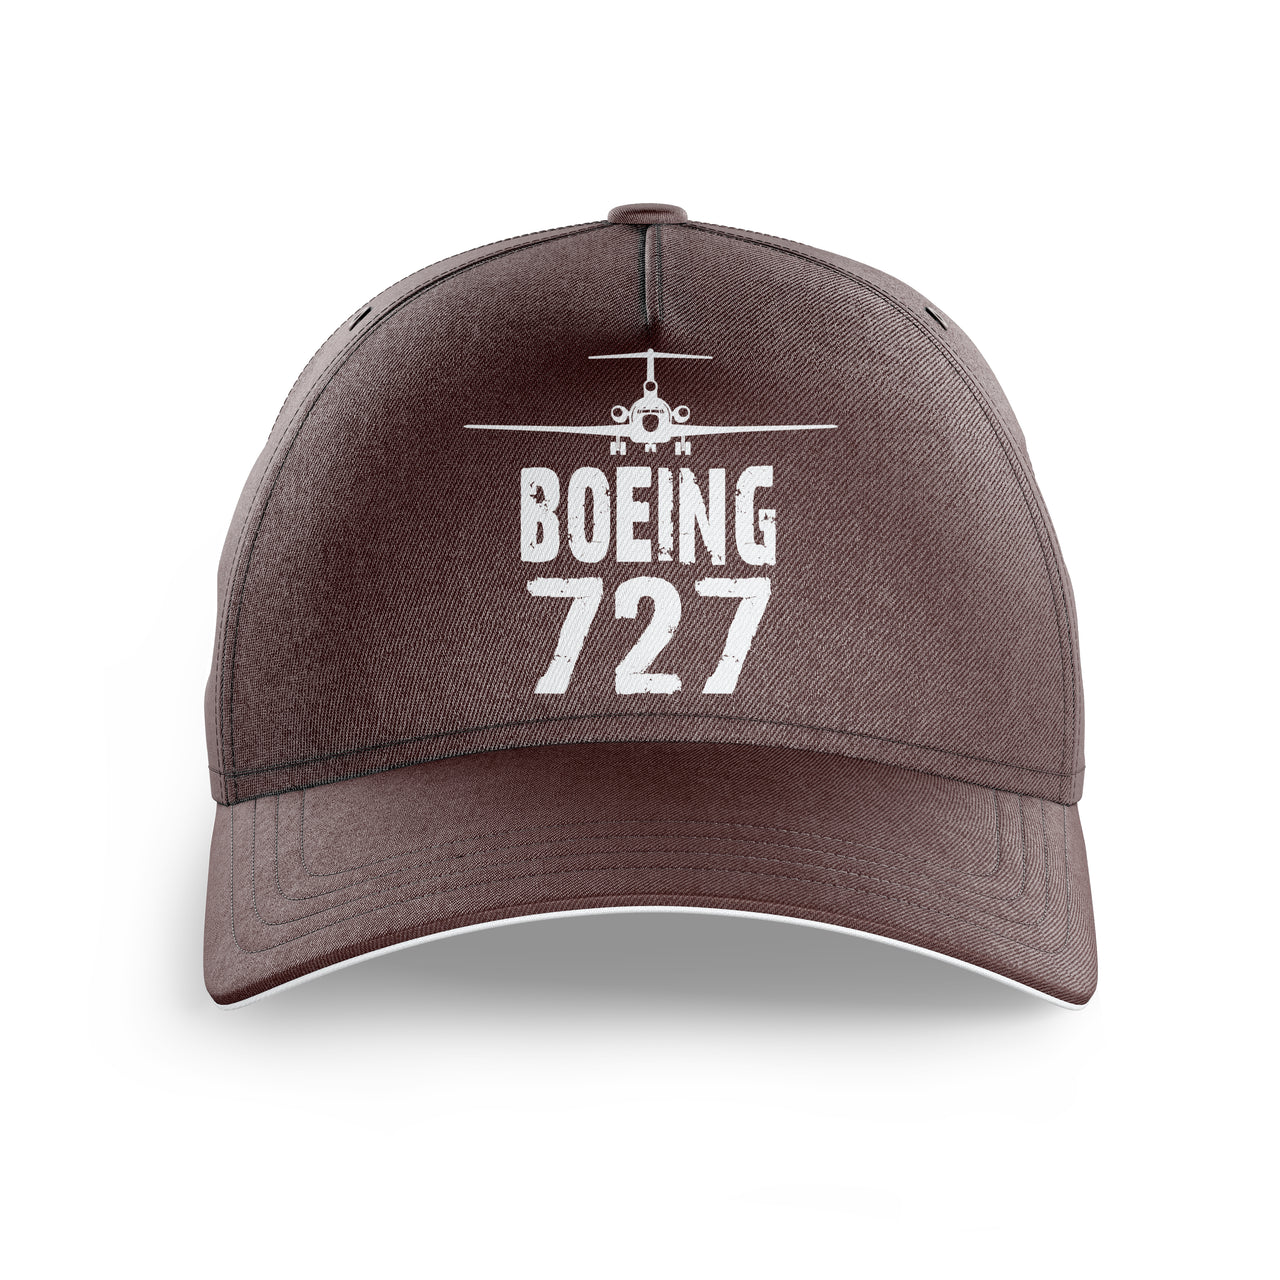 Boeing 727 & Plane Printed Hats